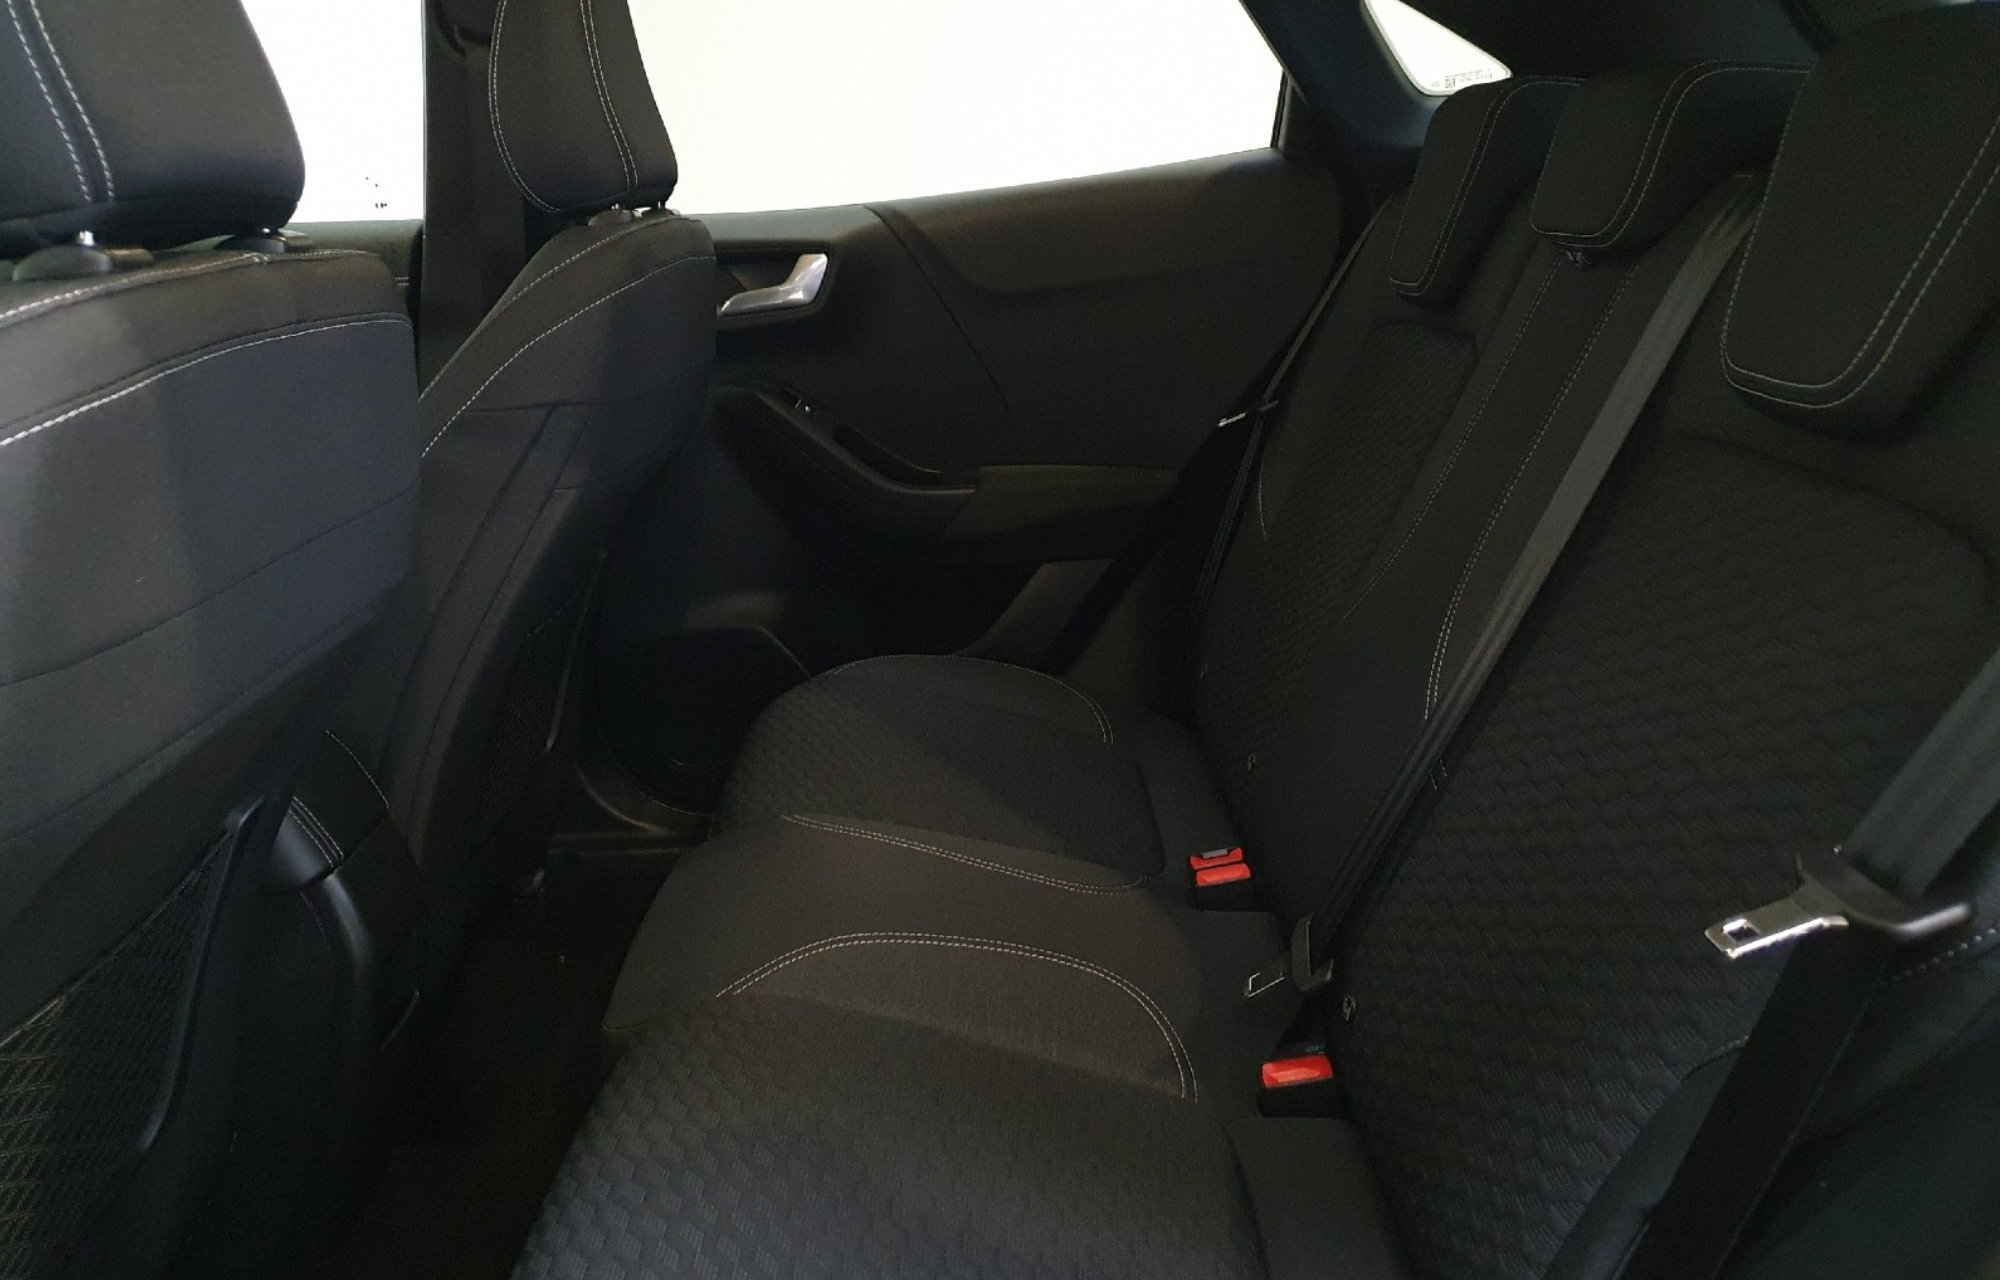 Ford Puma Titanium seats